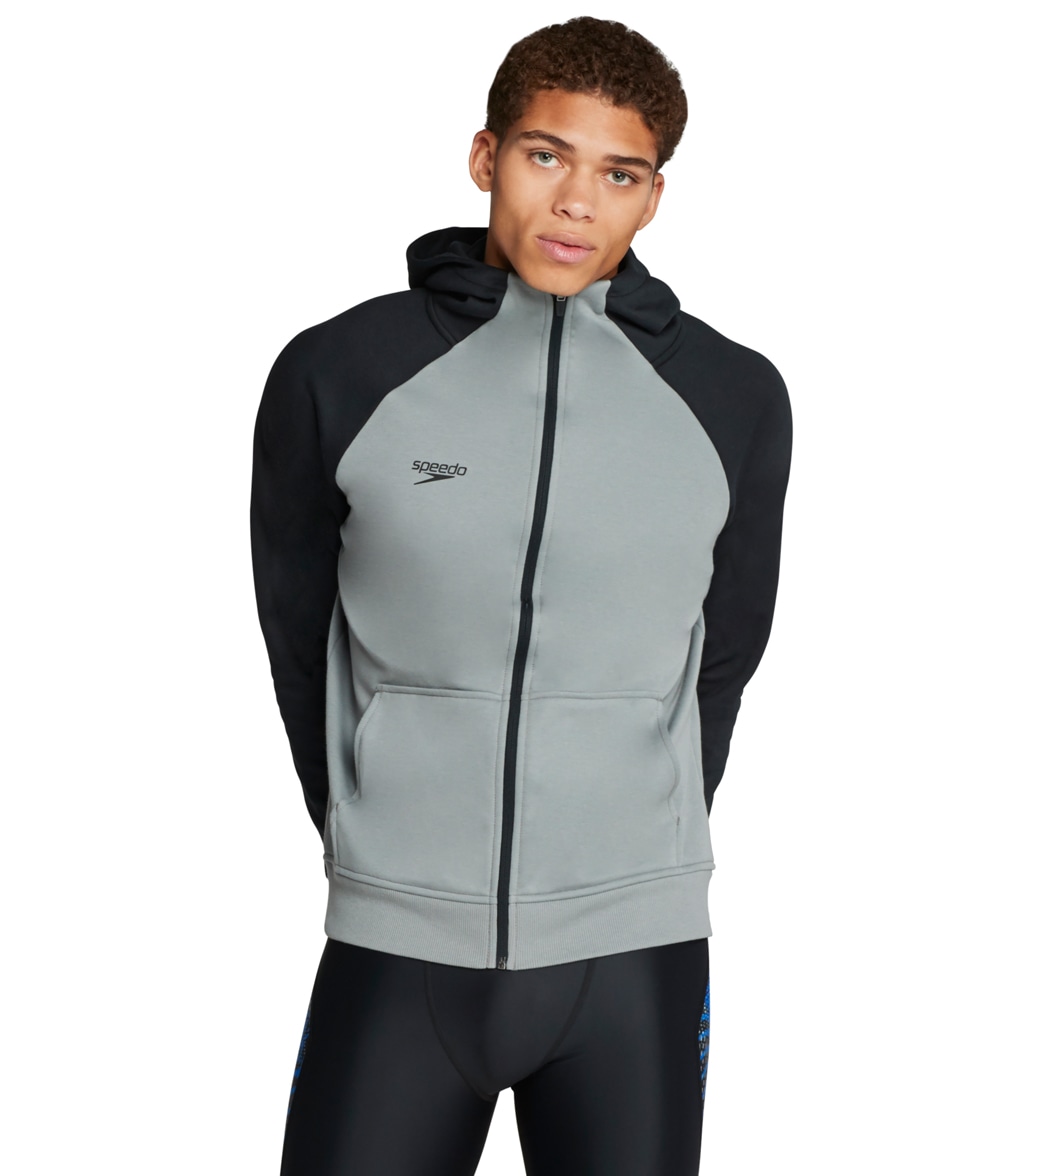 Speedo men's team jacket - monument 2xl cotton/polyester - swimoutlet.com